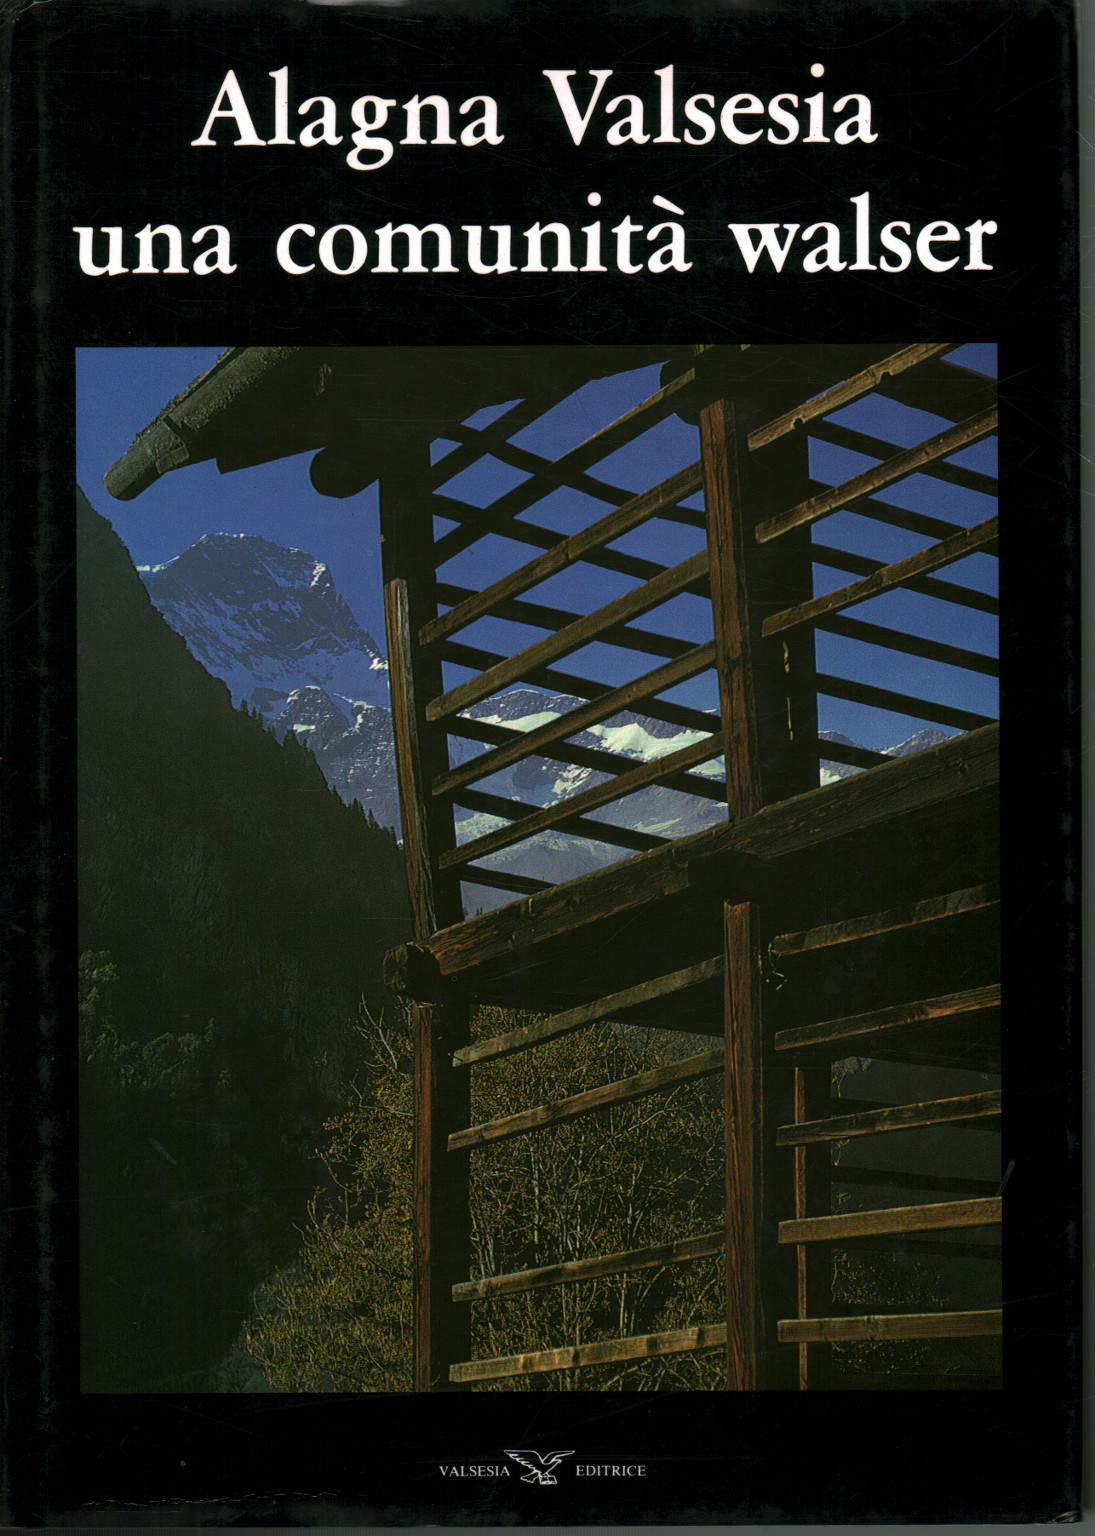 Alagna Valsesia a Walser community